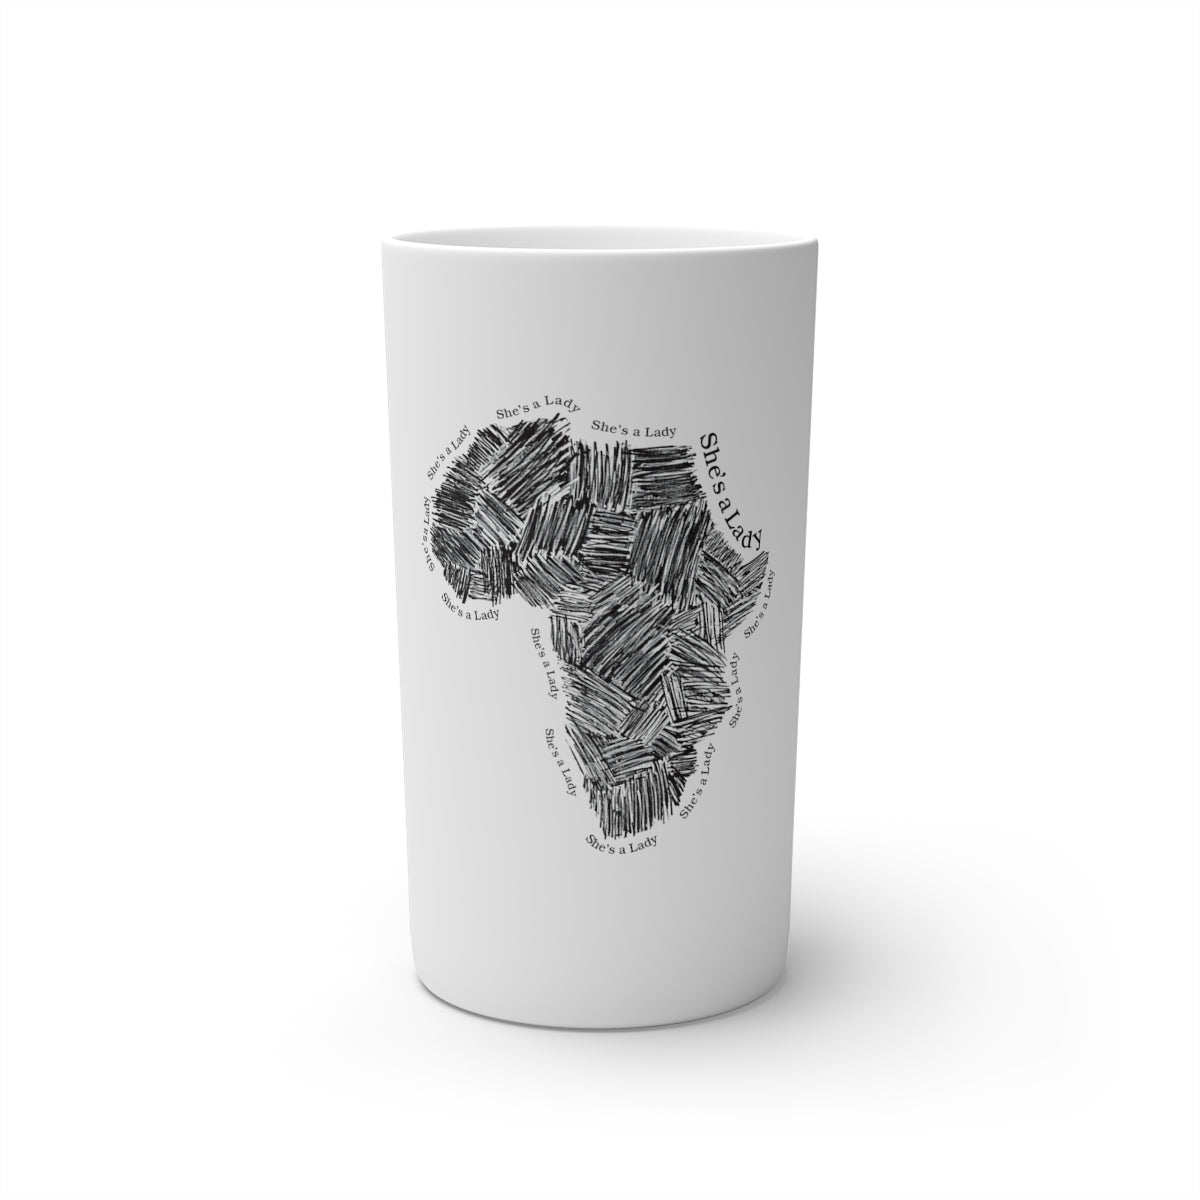 She's a Lady Africa Conical Coffee Mugs (3oz, 8oz, 12oz)